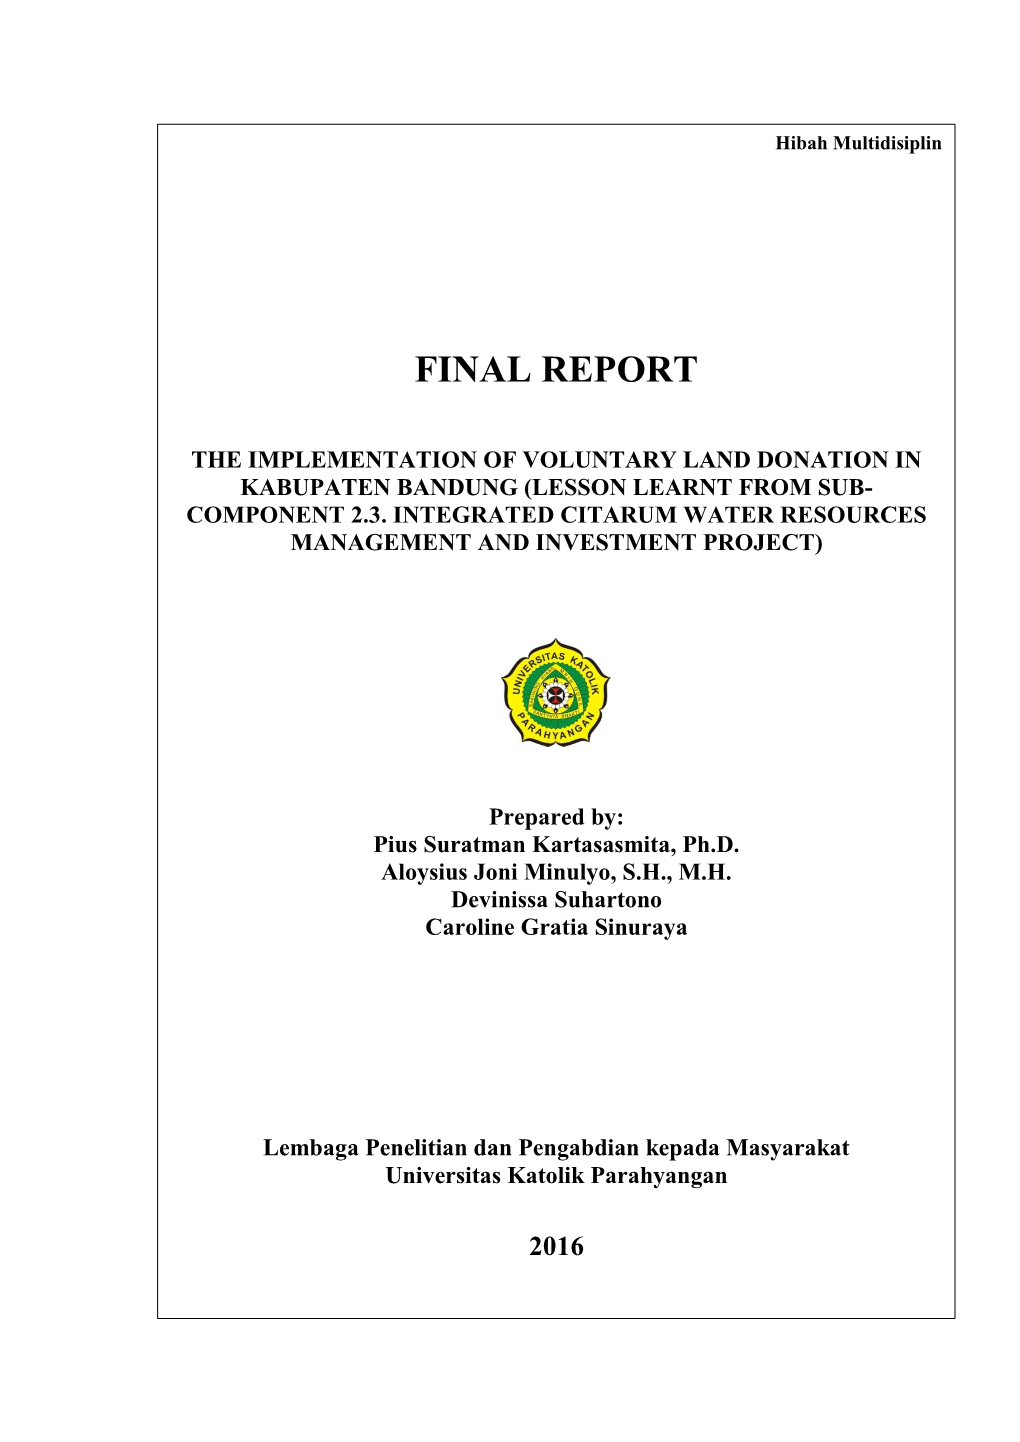 Final Verification Report on Voluntary Land Donation